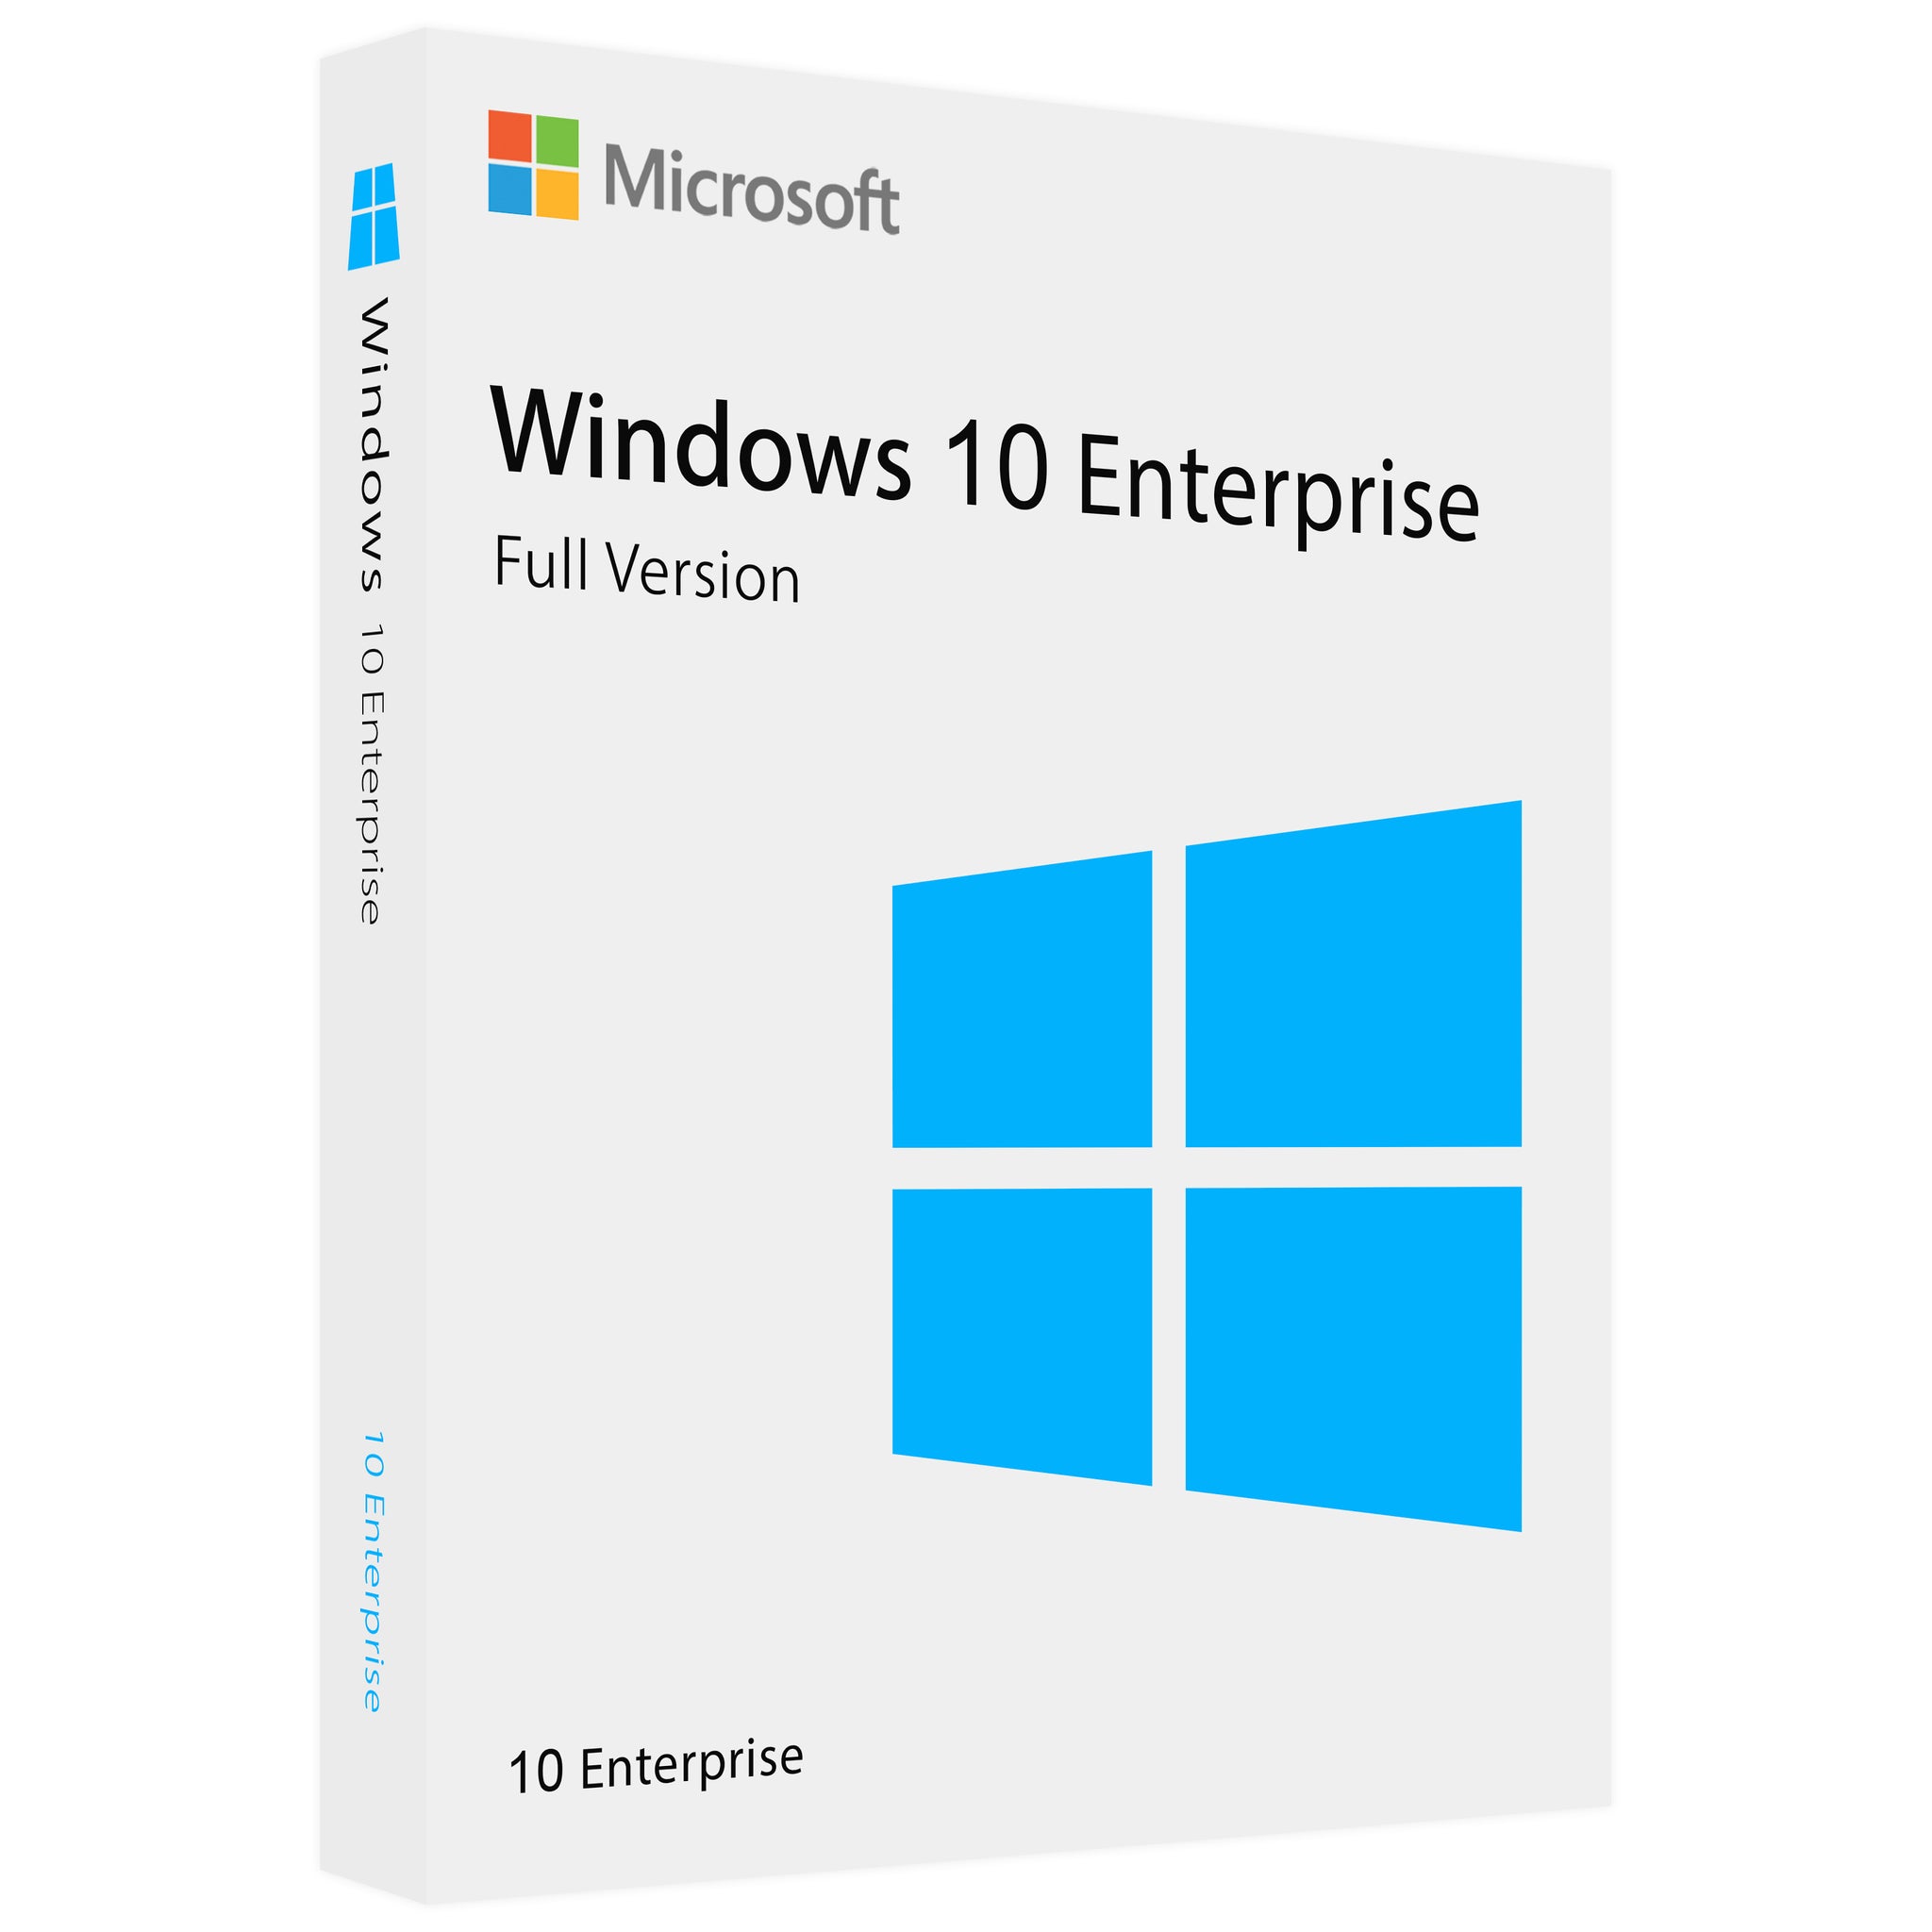 Microsoft Windows 10 Enterprise - Lifetime License Key for 1 PC